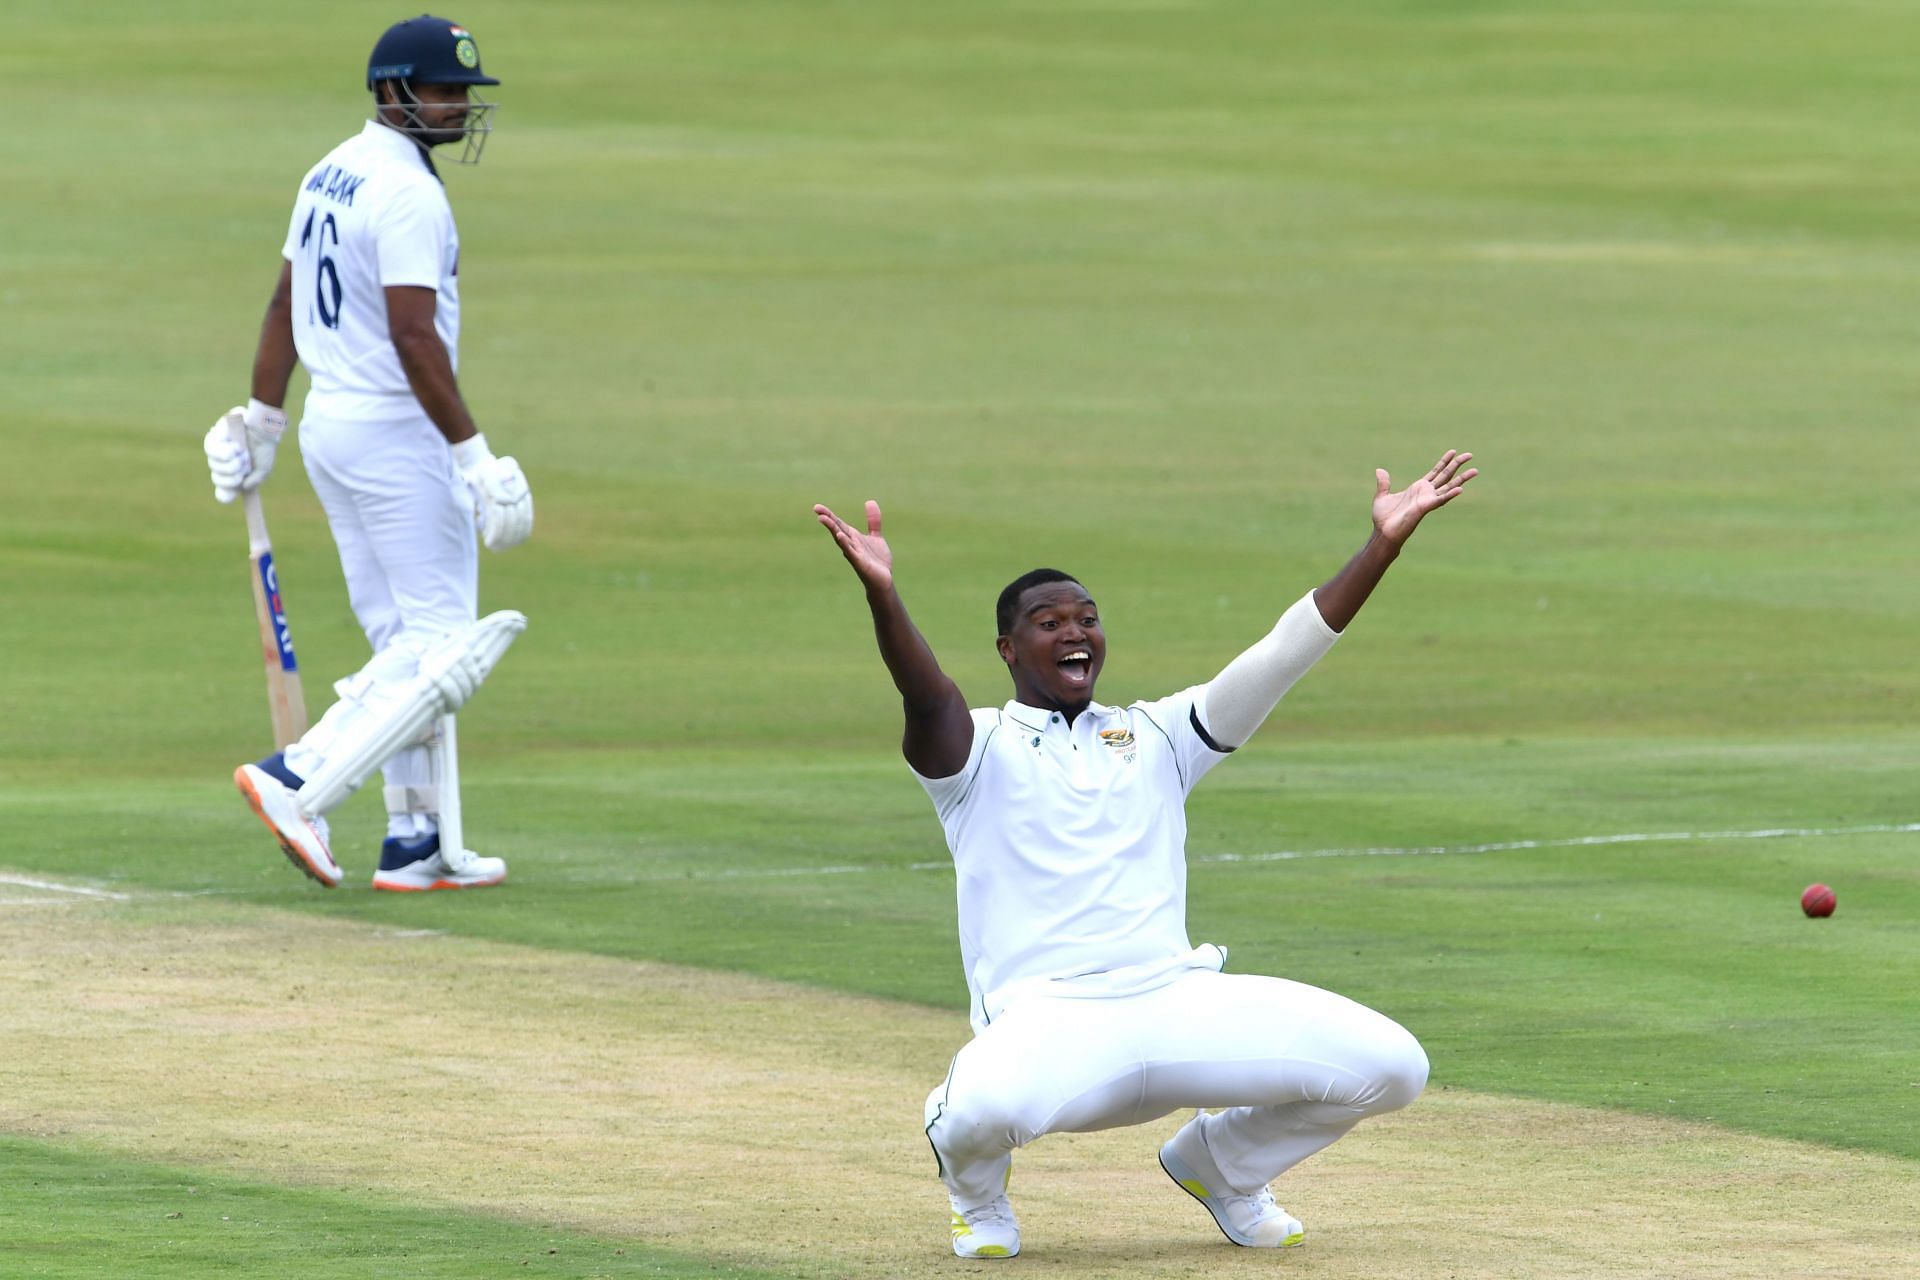 पहला बेटवे डब्ल्यूटीसी टेस्ट: दक्षिण अफ्रीका बनाम भारत - पहला दिन